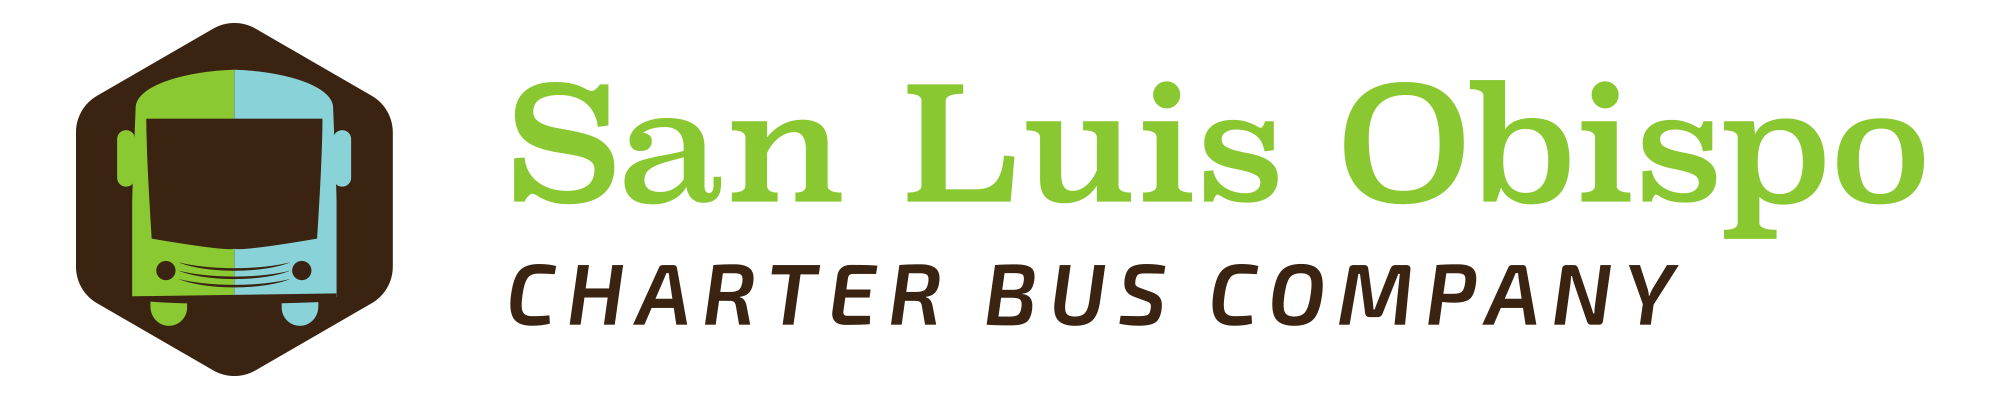 San Luis Obispo Charter Bus Company